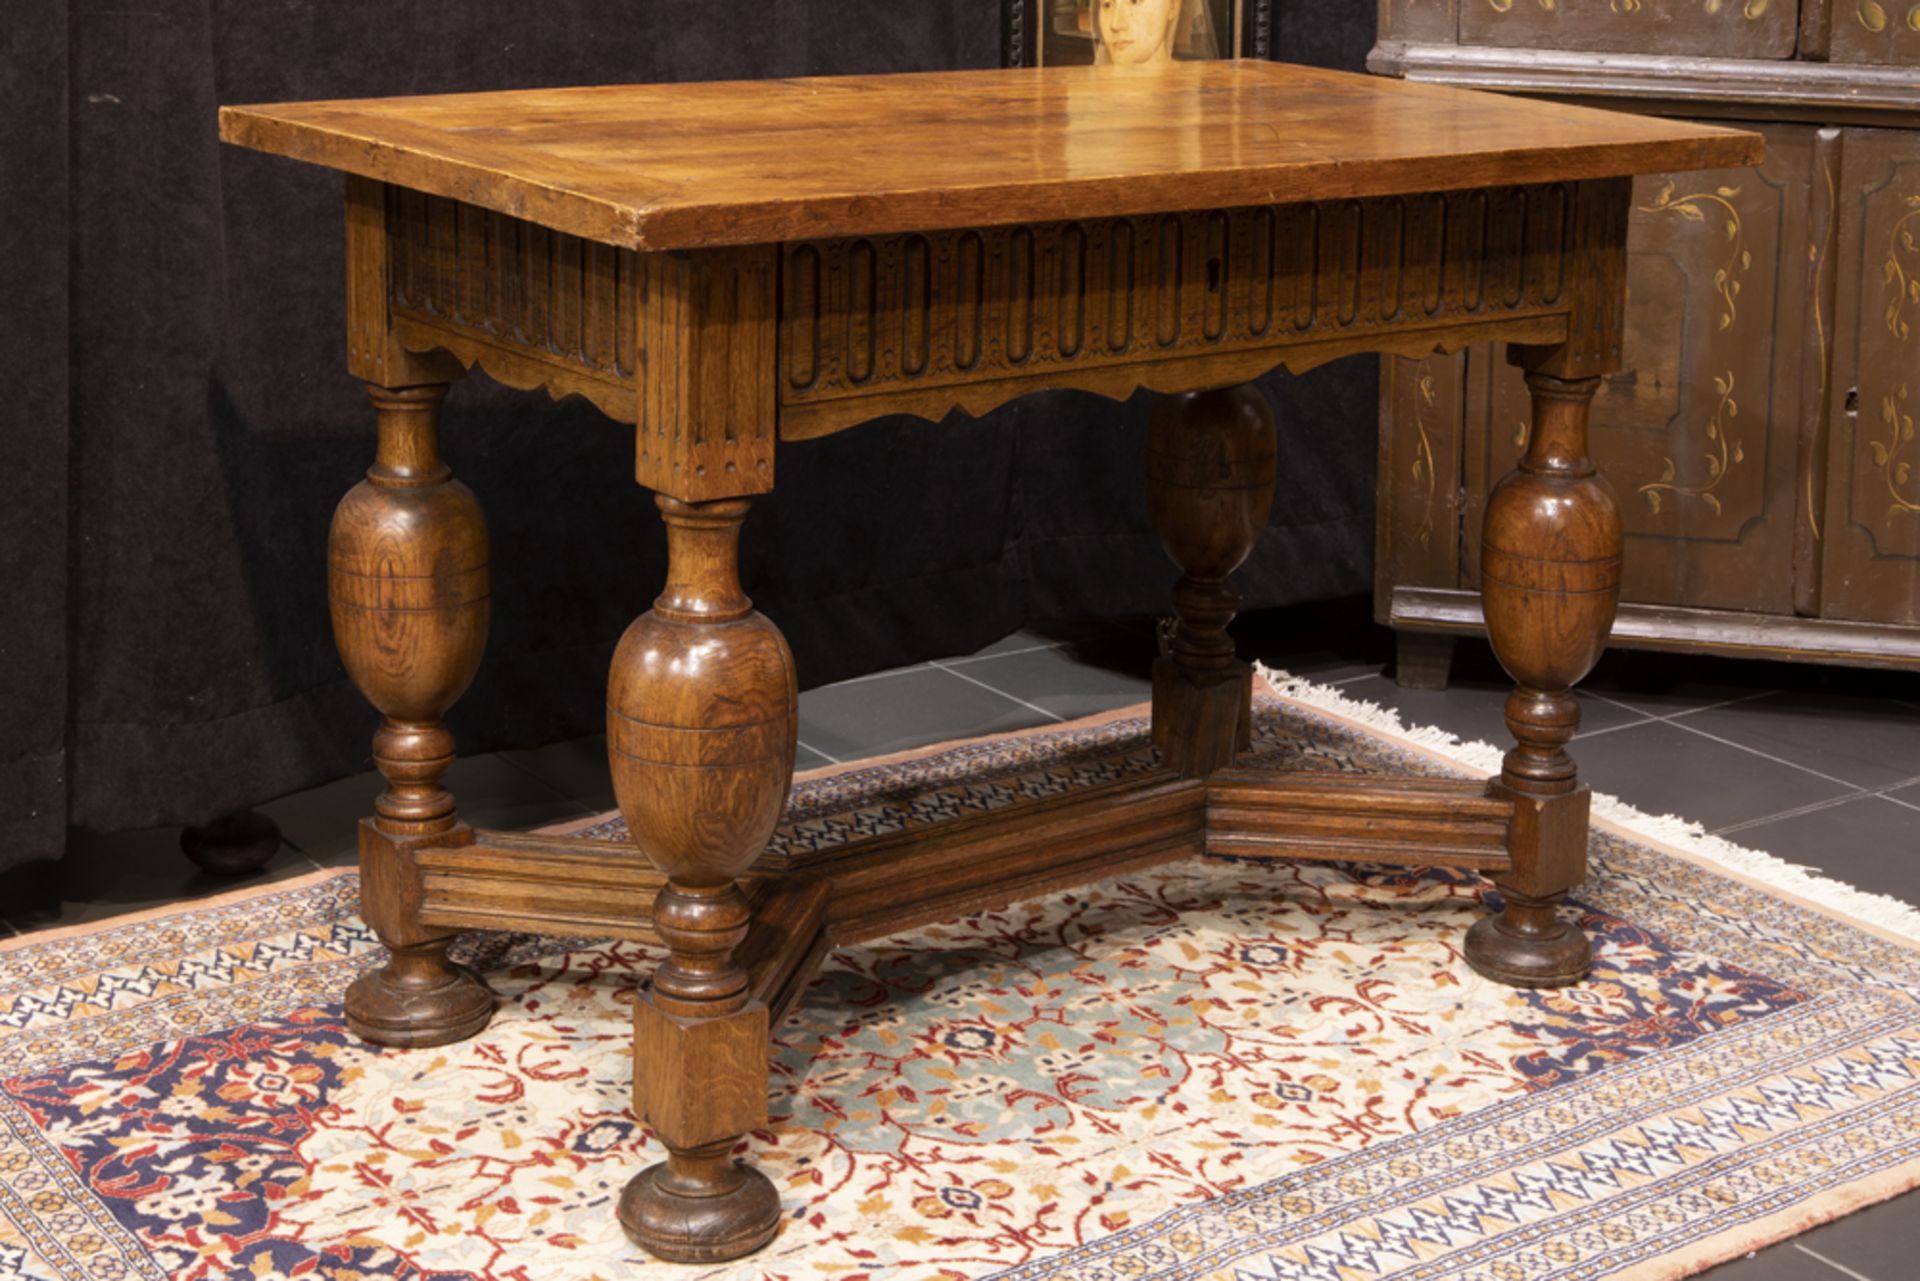 small antique Renaissance style oak table with drawer||Antiek Renaissance betaaltafeltje met lade in